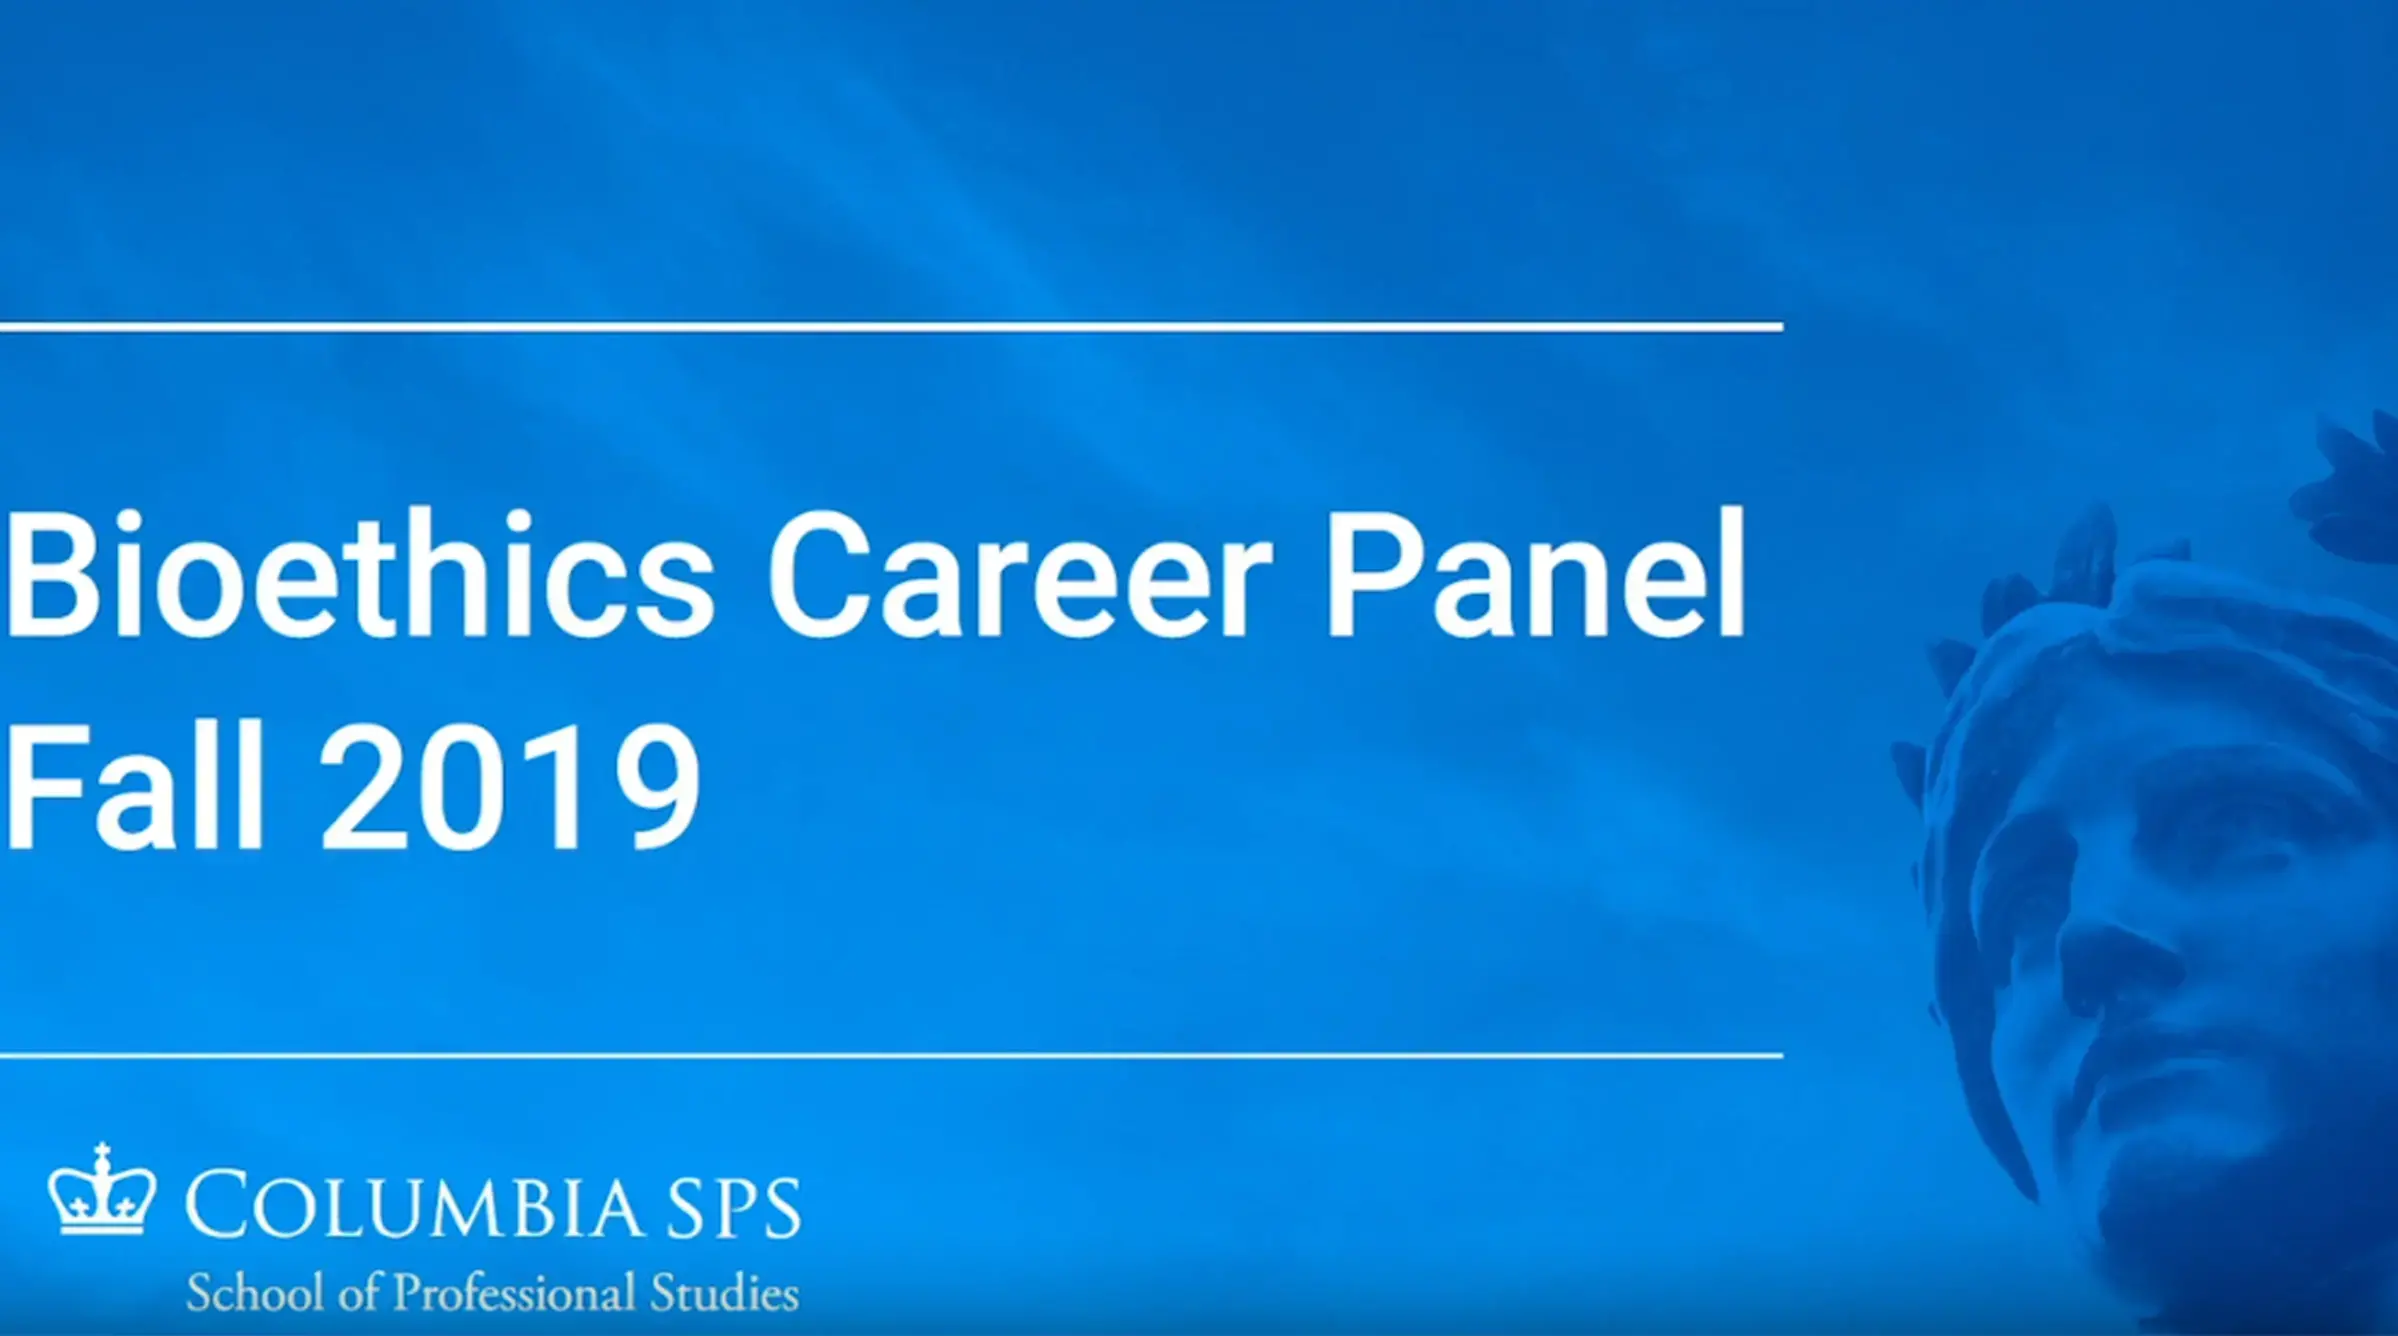 Bioethics Career Panel - Fall 2019